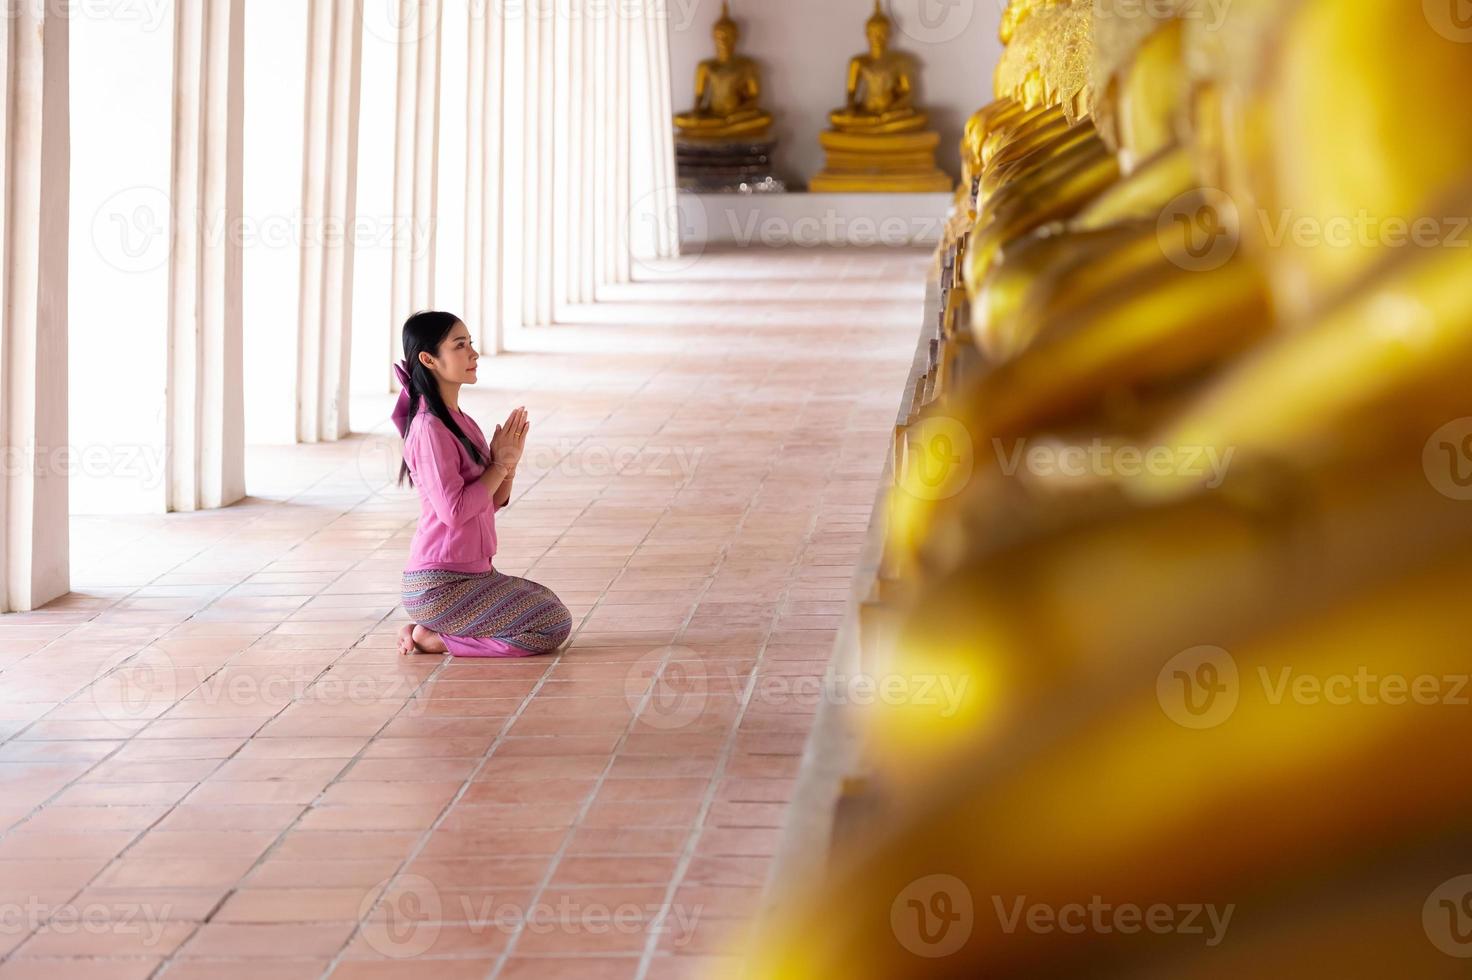 ásia mulher para pagando respeito para Buda estátua dentro ayutthaya, tailândia. foto